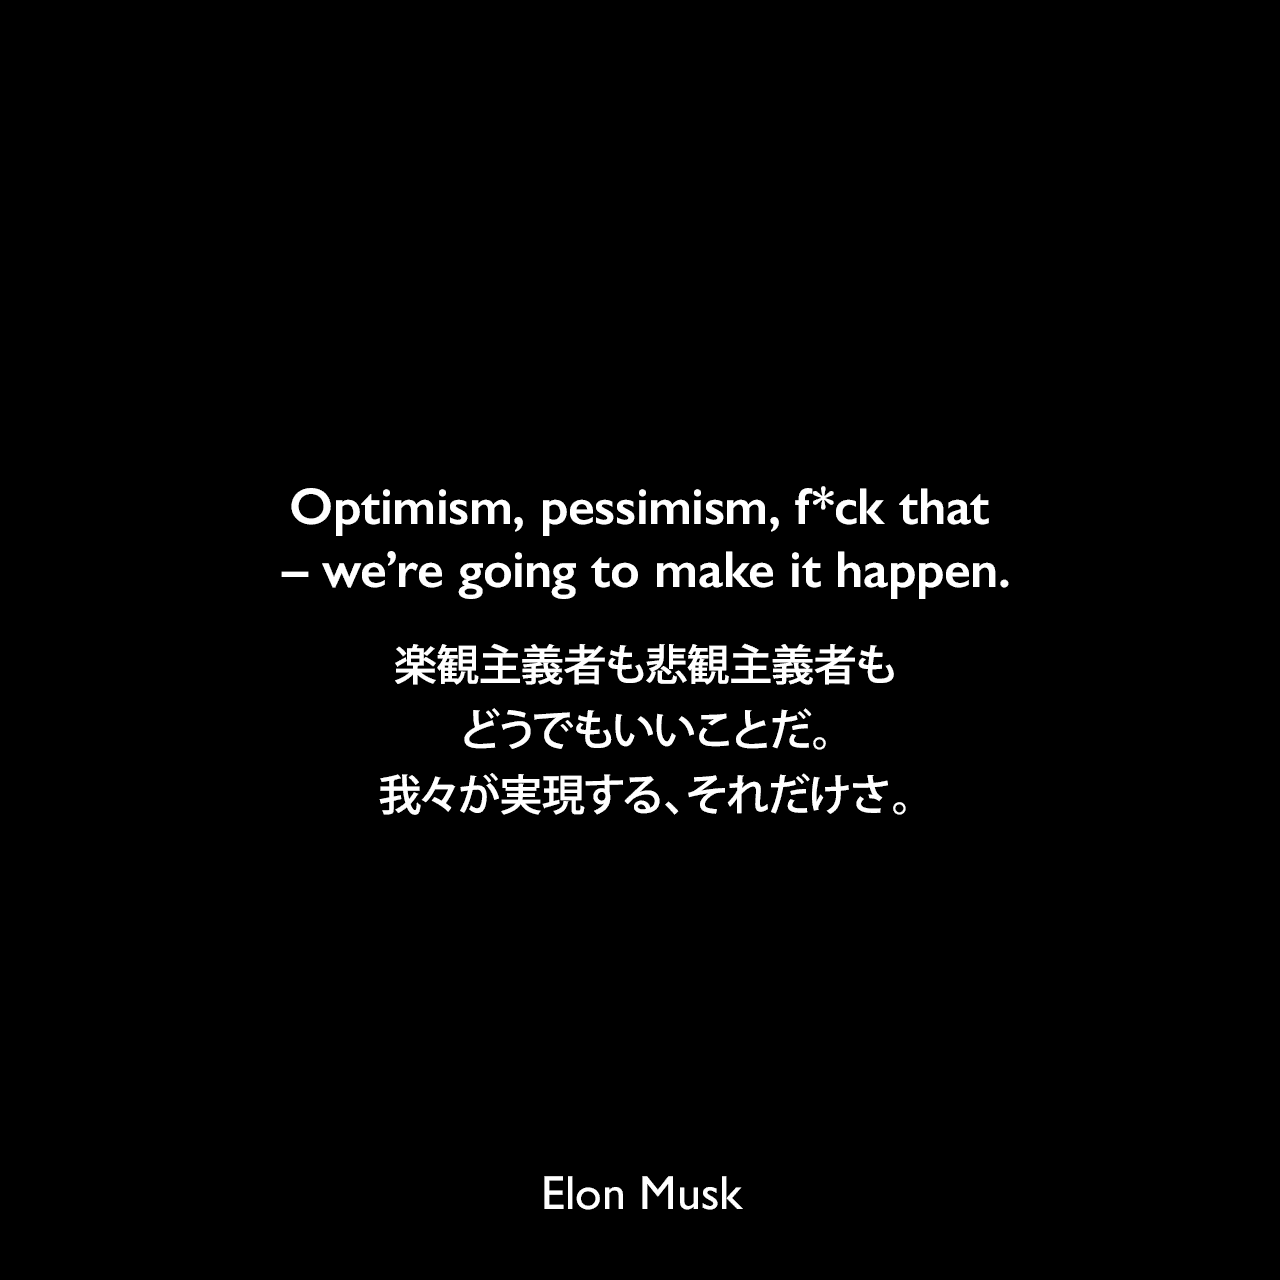 Optimism, pessimism, f*ck that – we’re going to make it happen.楽観主義者も悲観主義者もどうでもいいことだ。我々が実現する、それだけさ。Elon Musk